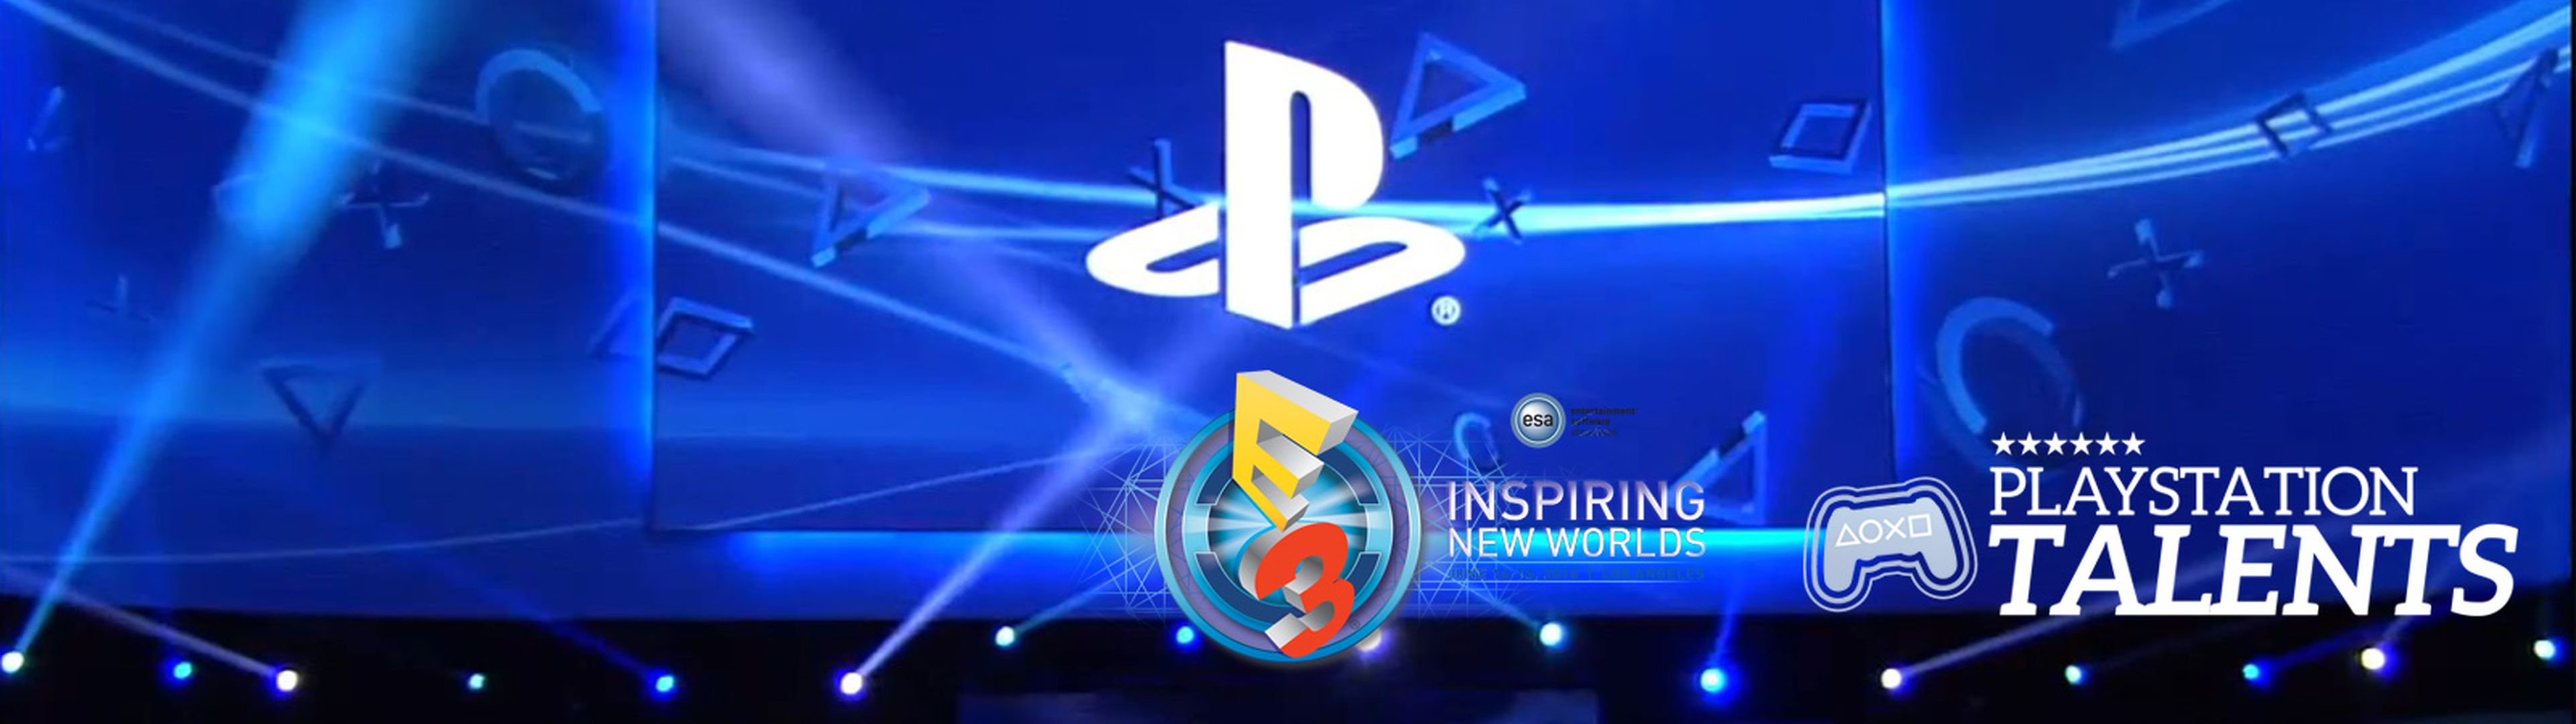 PlayStation Talents estará en el E3 2016